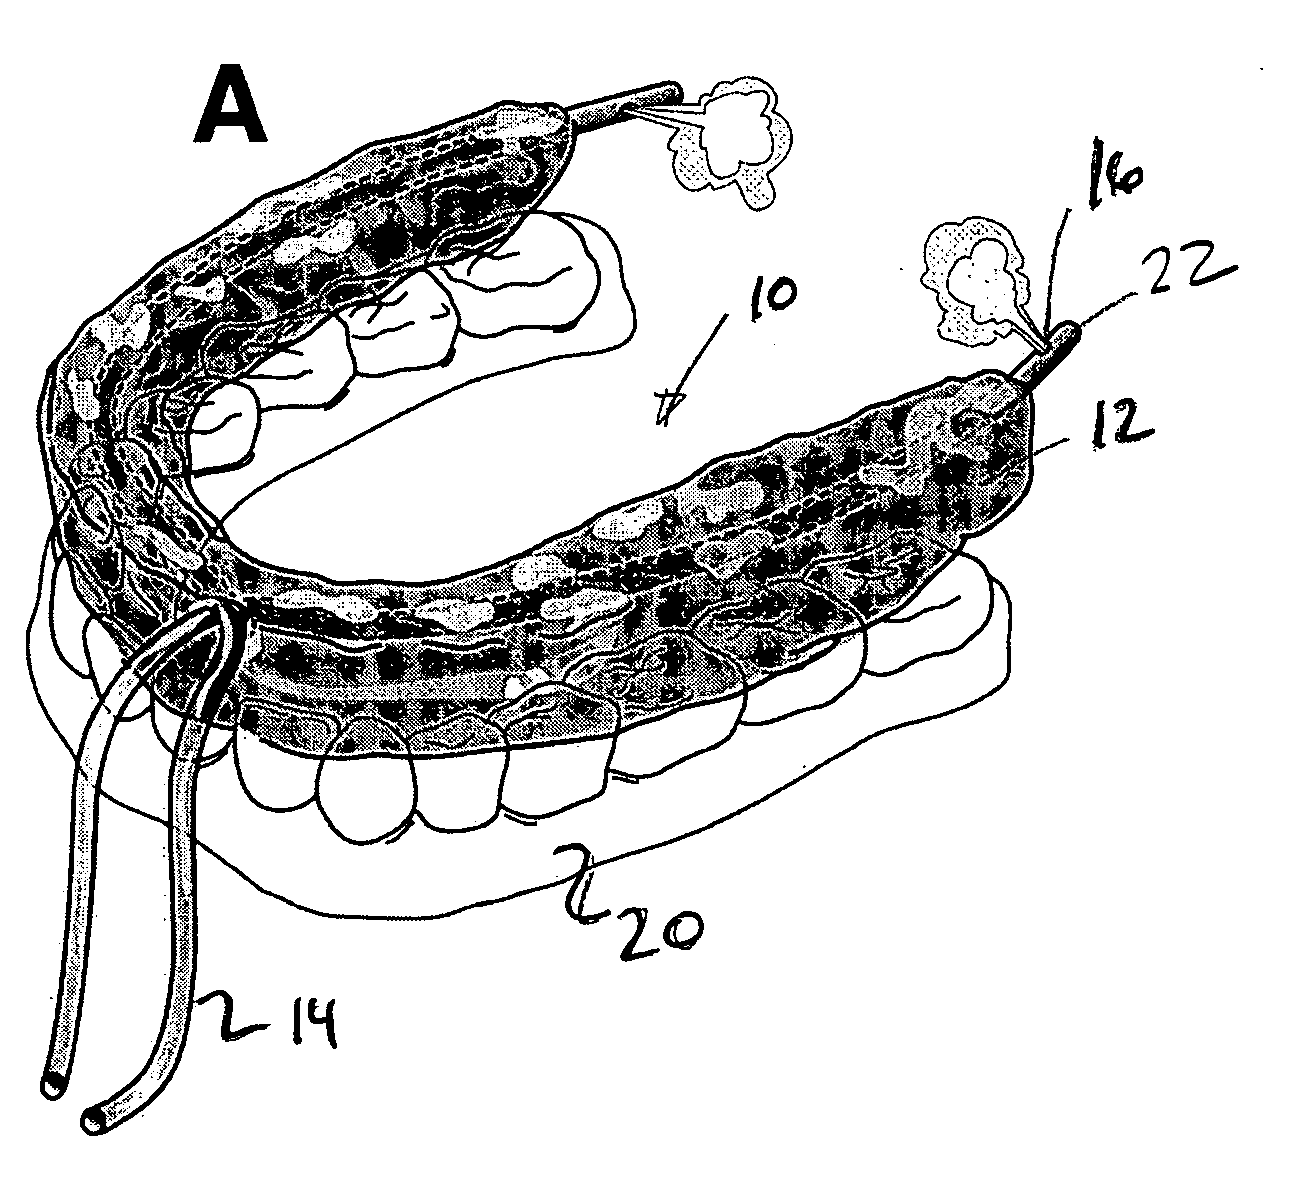 Oral device